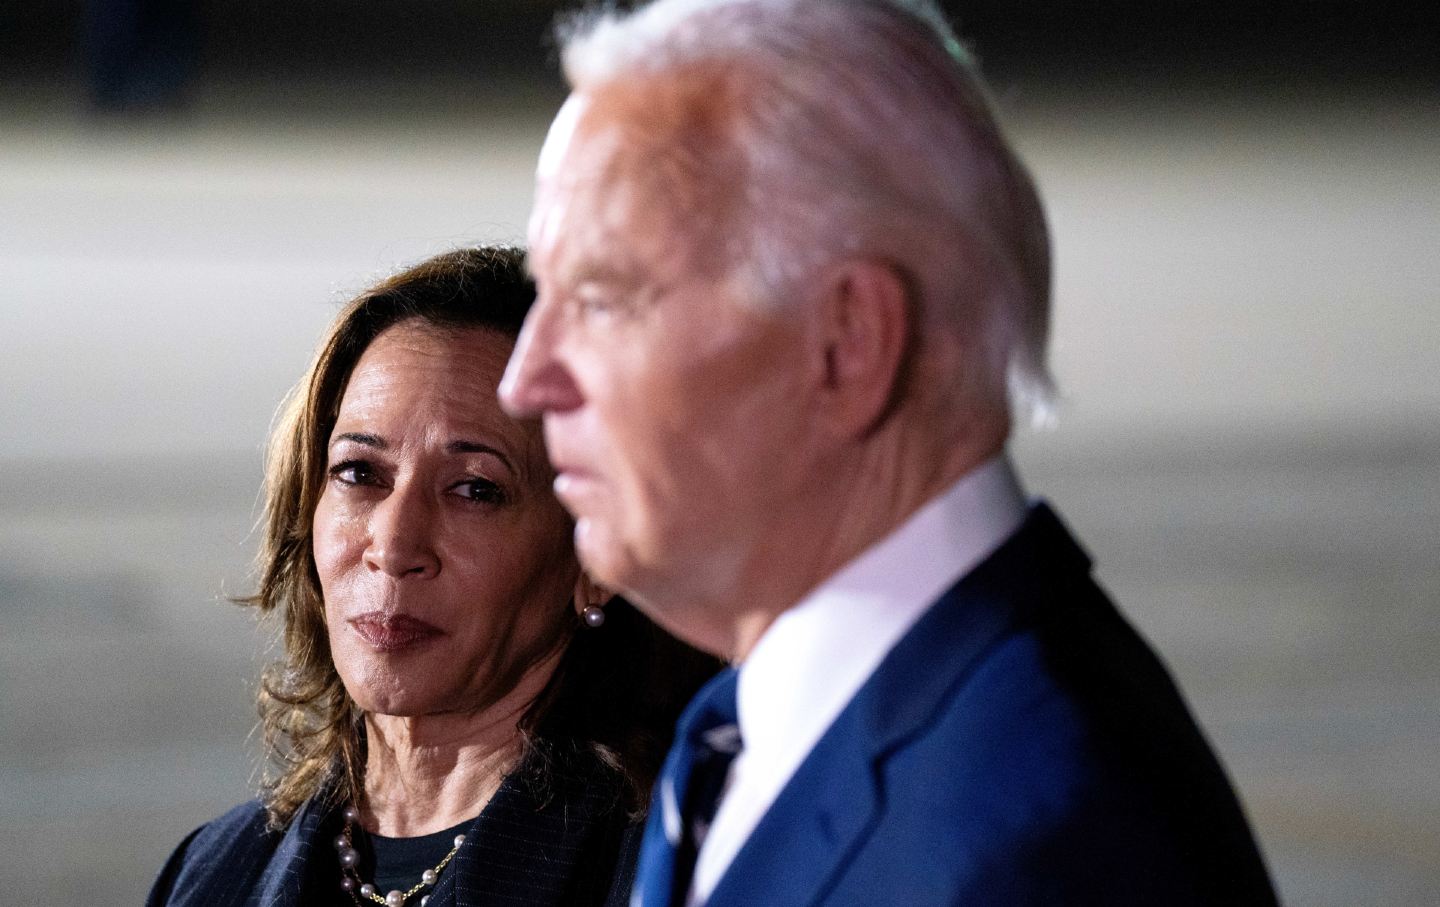 Kamala Harris looking at Joe Biden